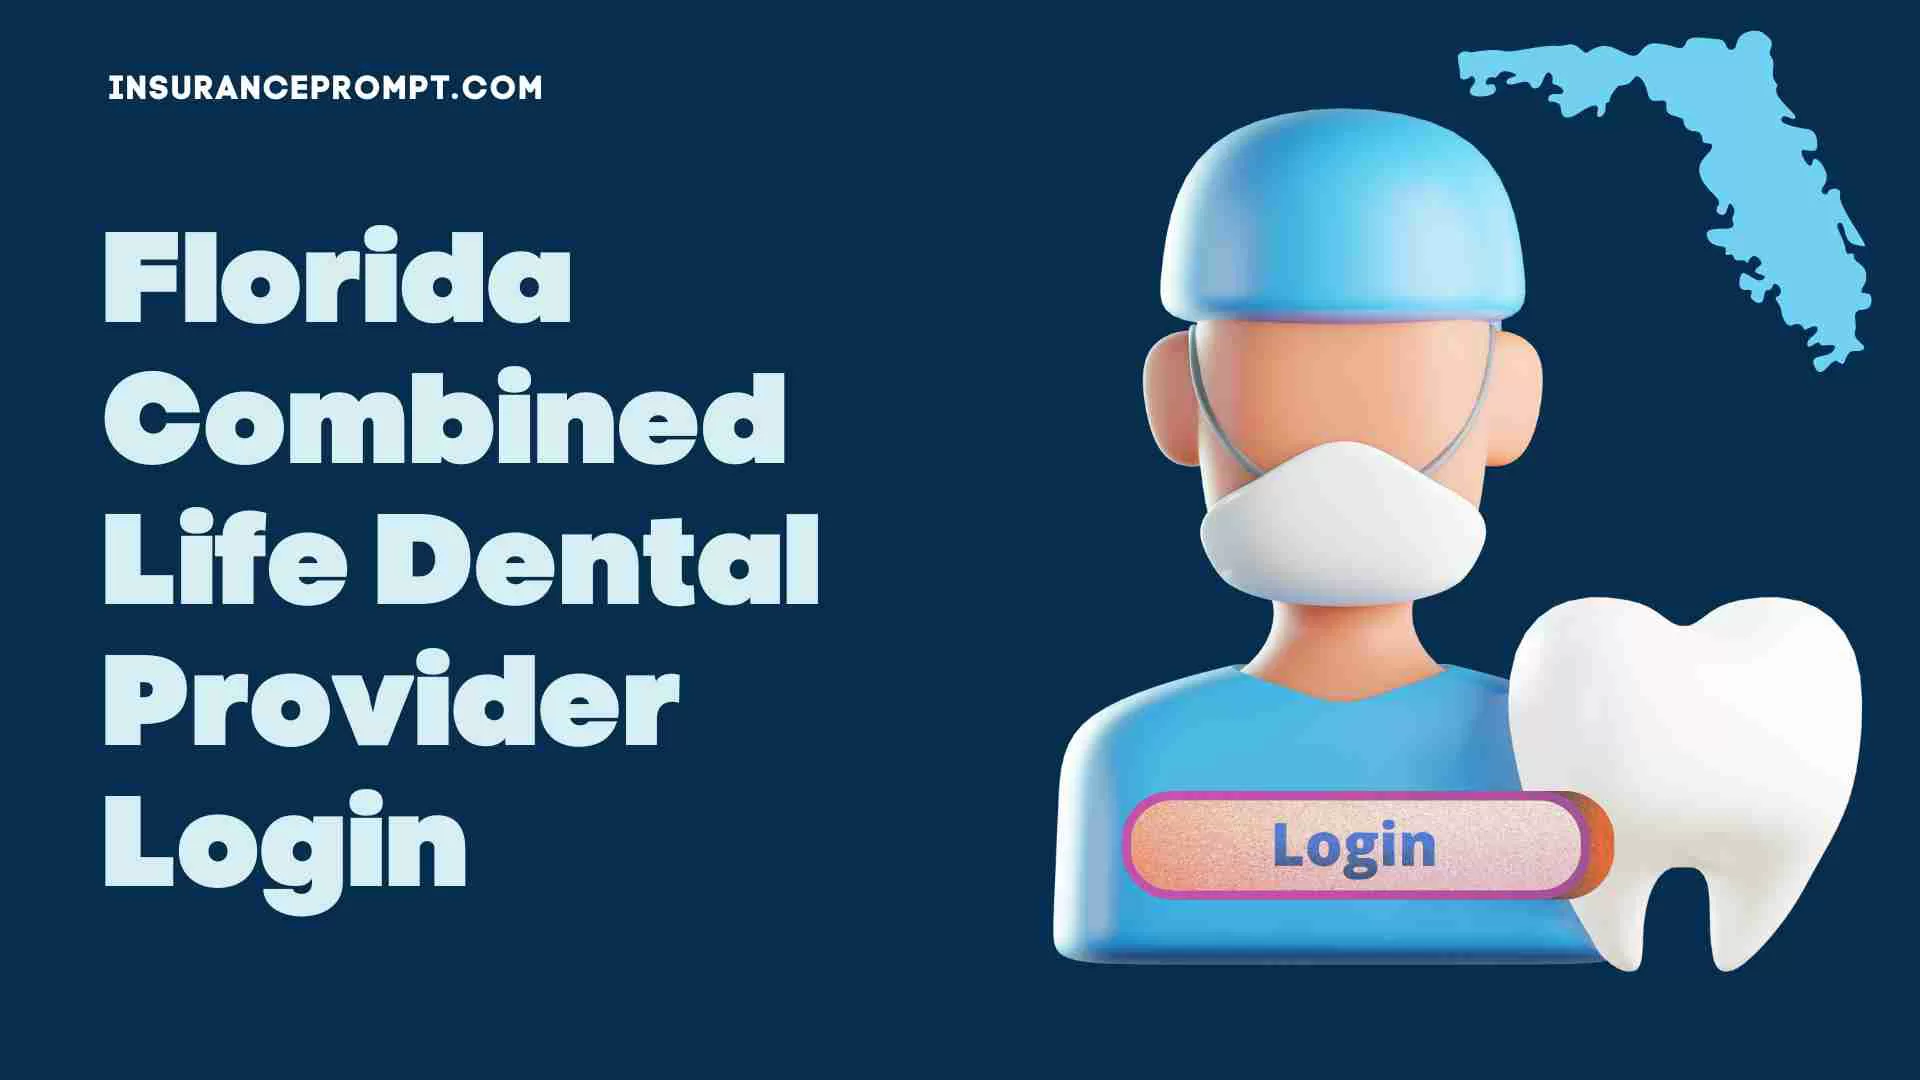 Florida Combined Life Dental Provider Login